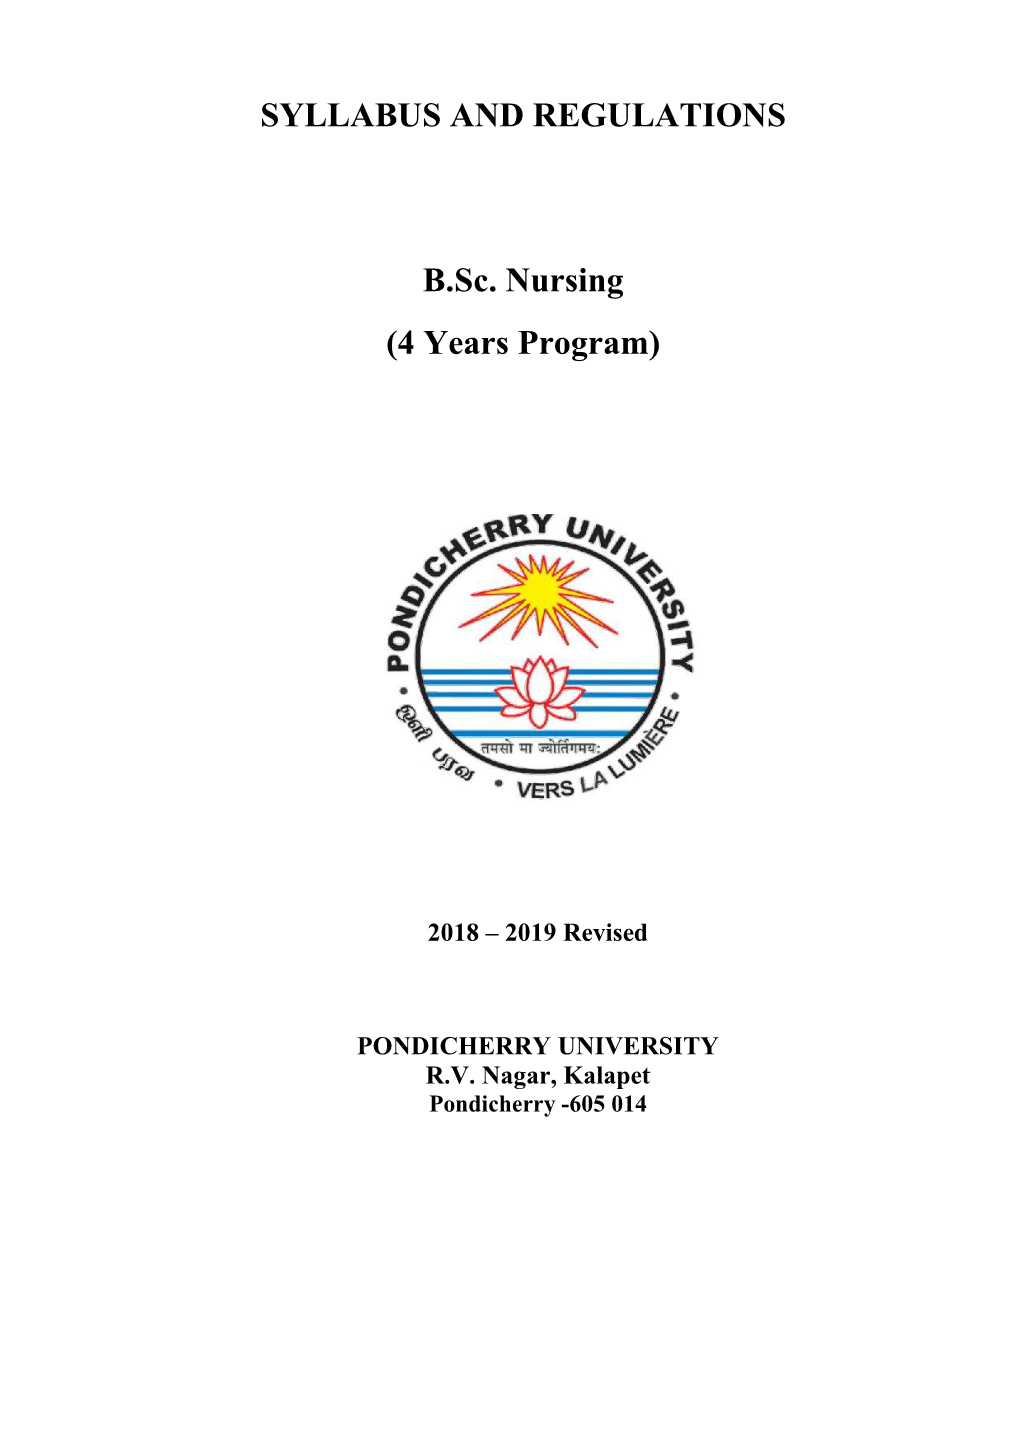 SYLLABUS and REGULATIONS B.Sc. Nursing (4 Years Program)